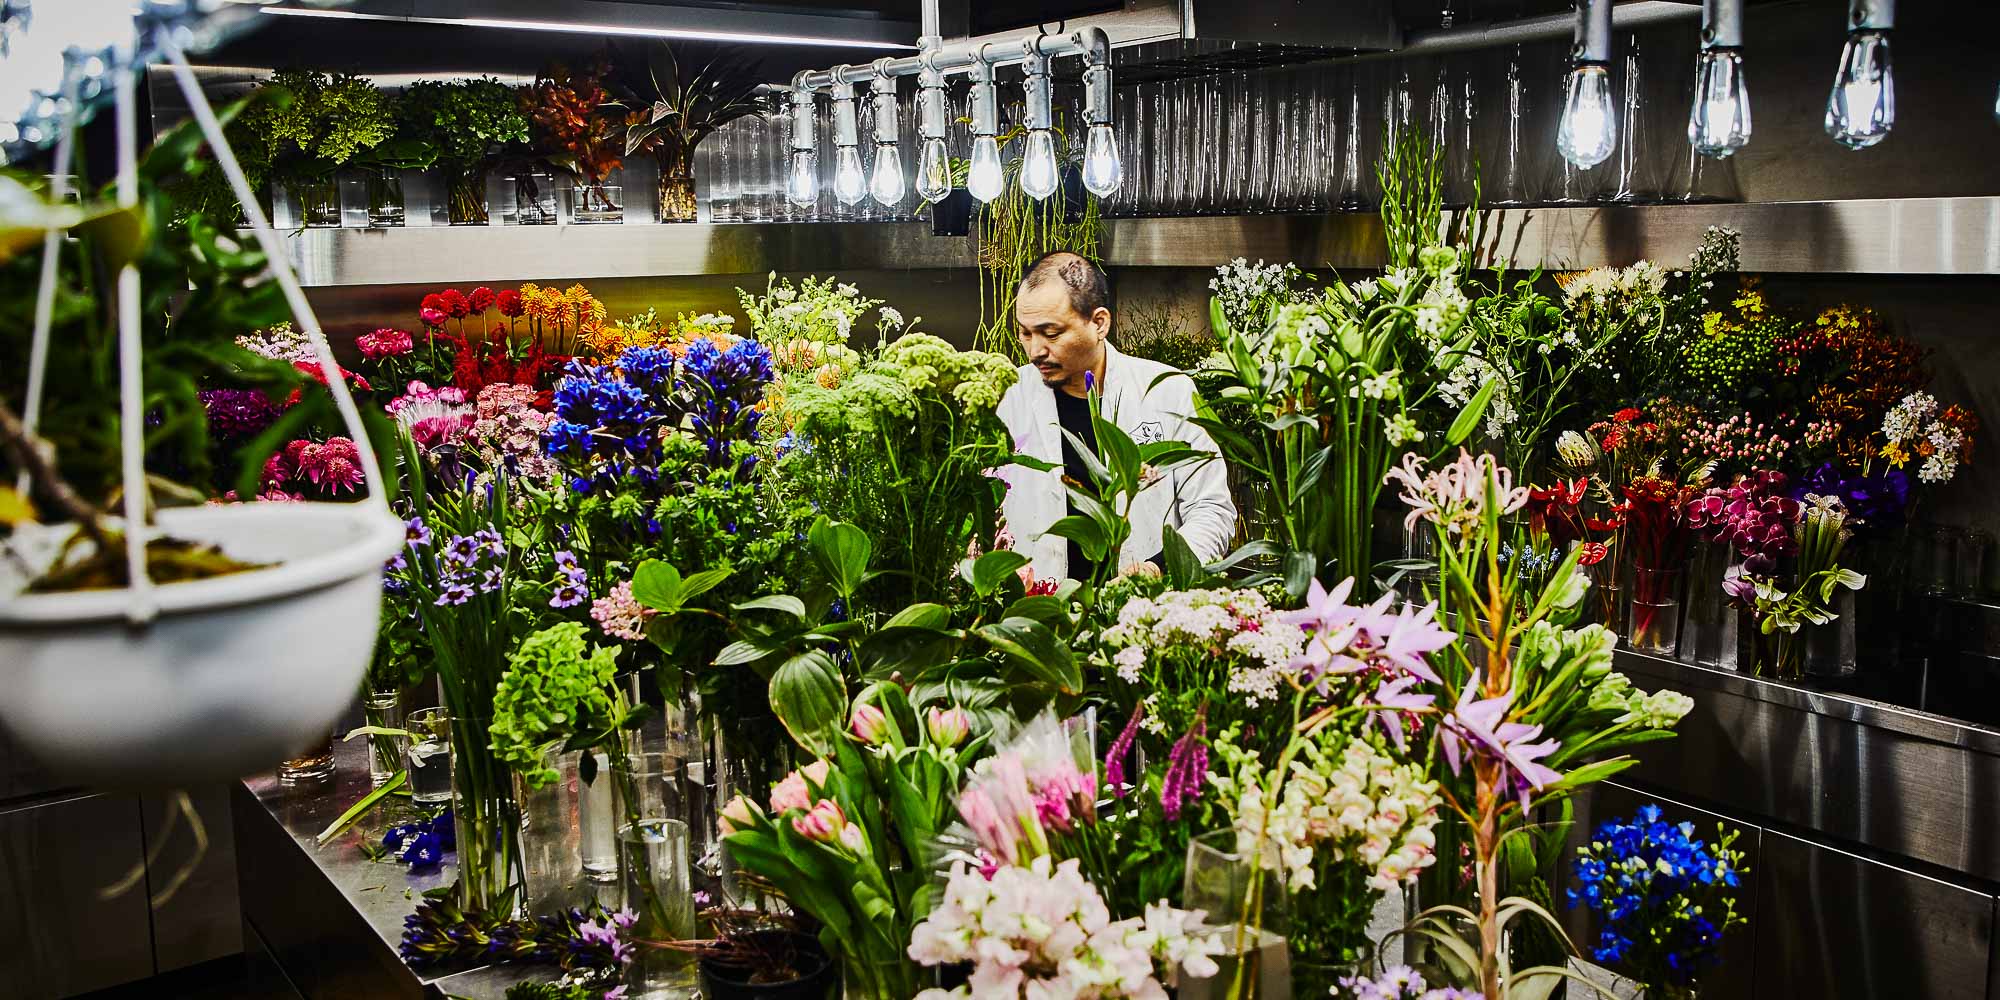 Makoto Azuma floral artist working in his workshop